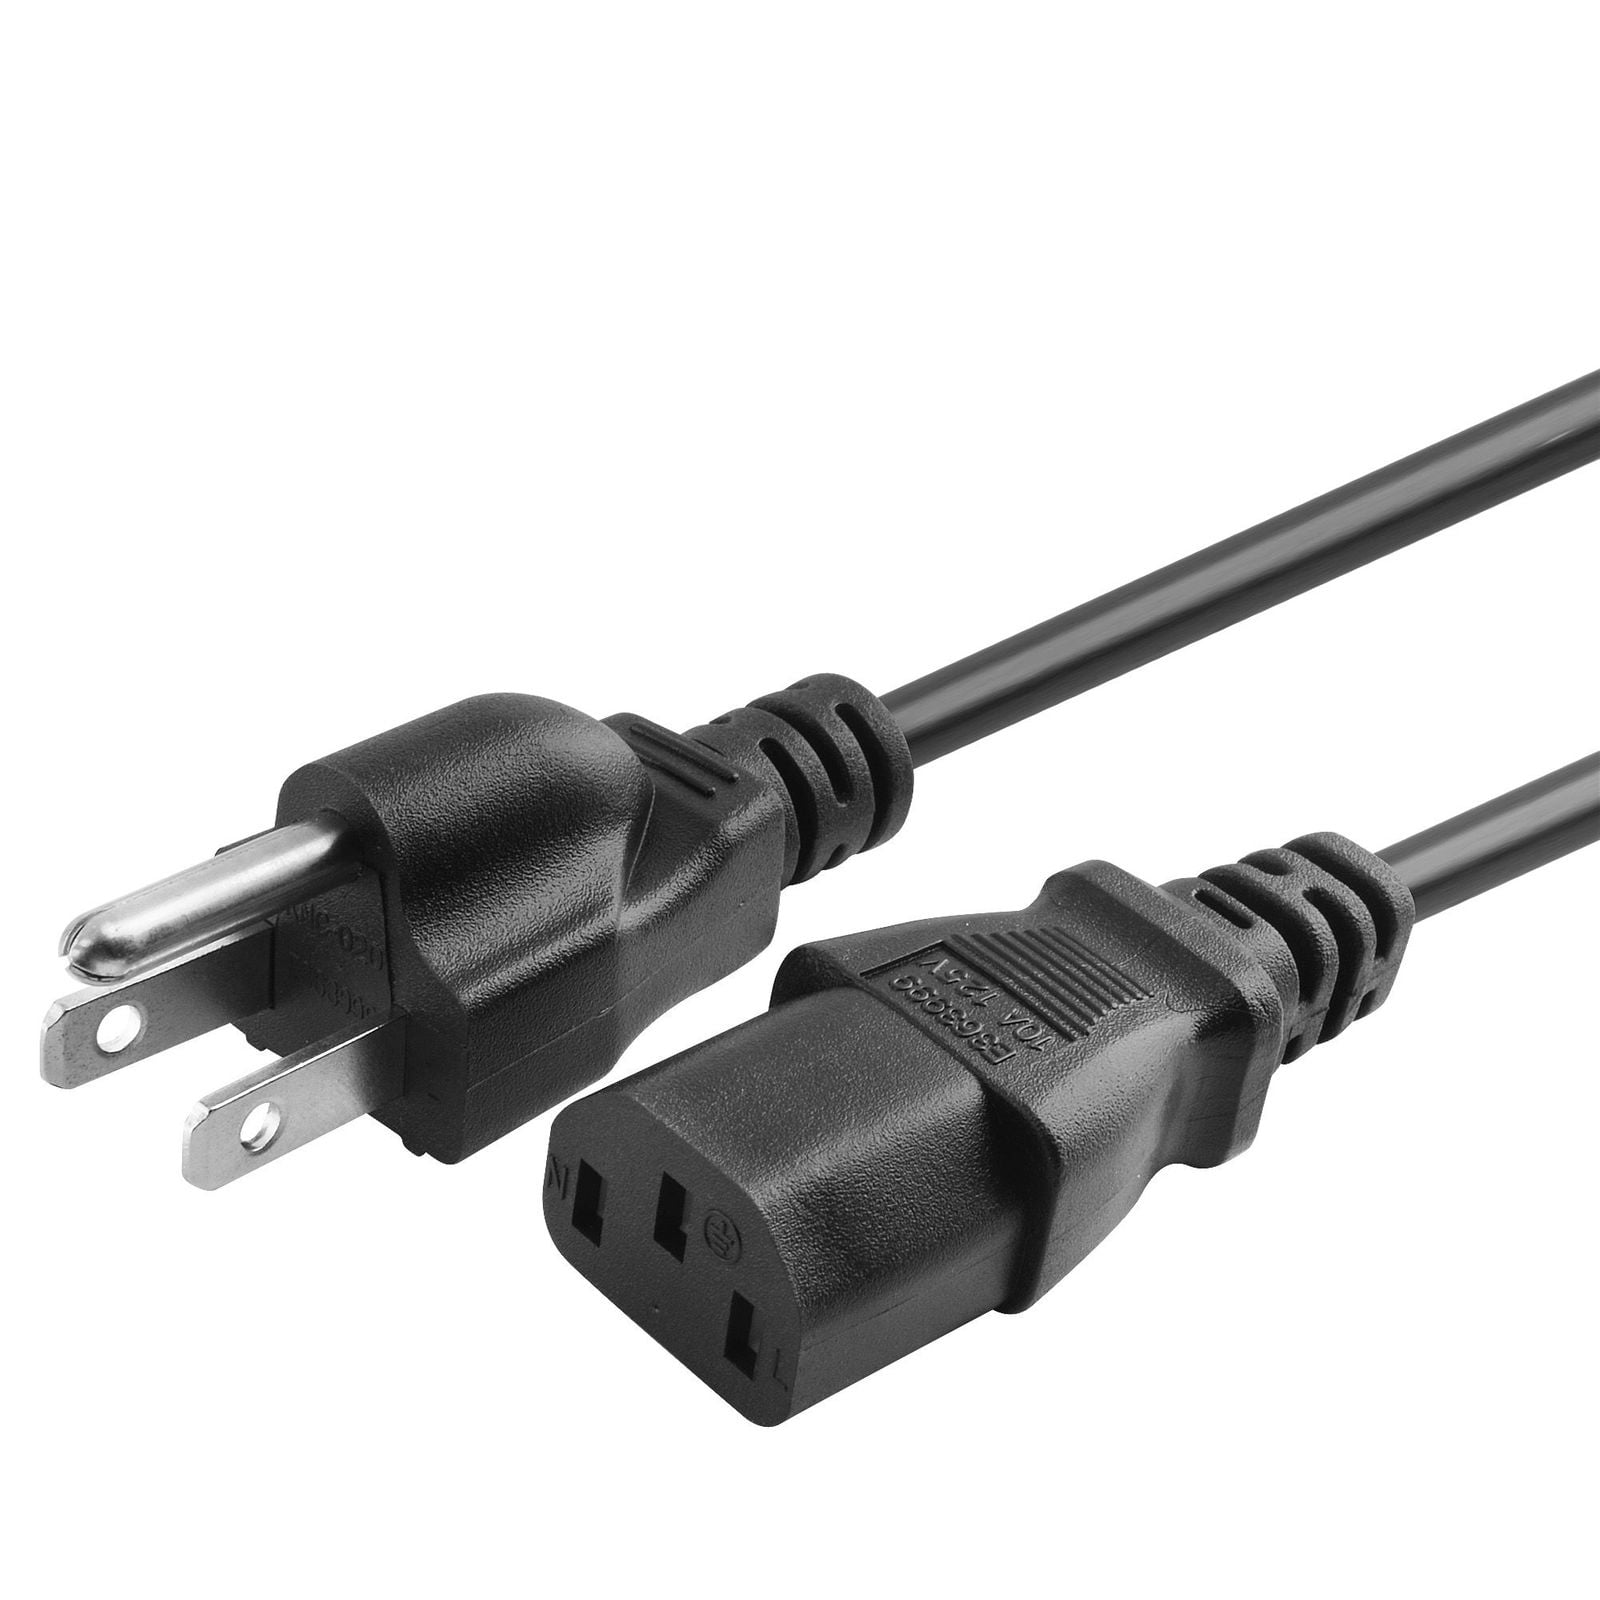 Insten 6 Feet 6FT Black 3 Prong US Plug AC Power Adapter Cable Cord for PC Laptop Desktop / Printers / Monitors Walmart.com